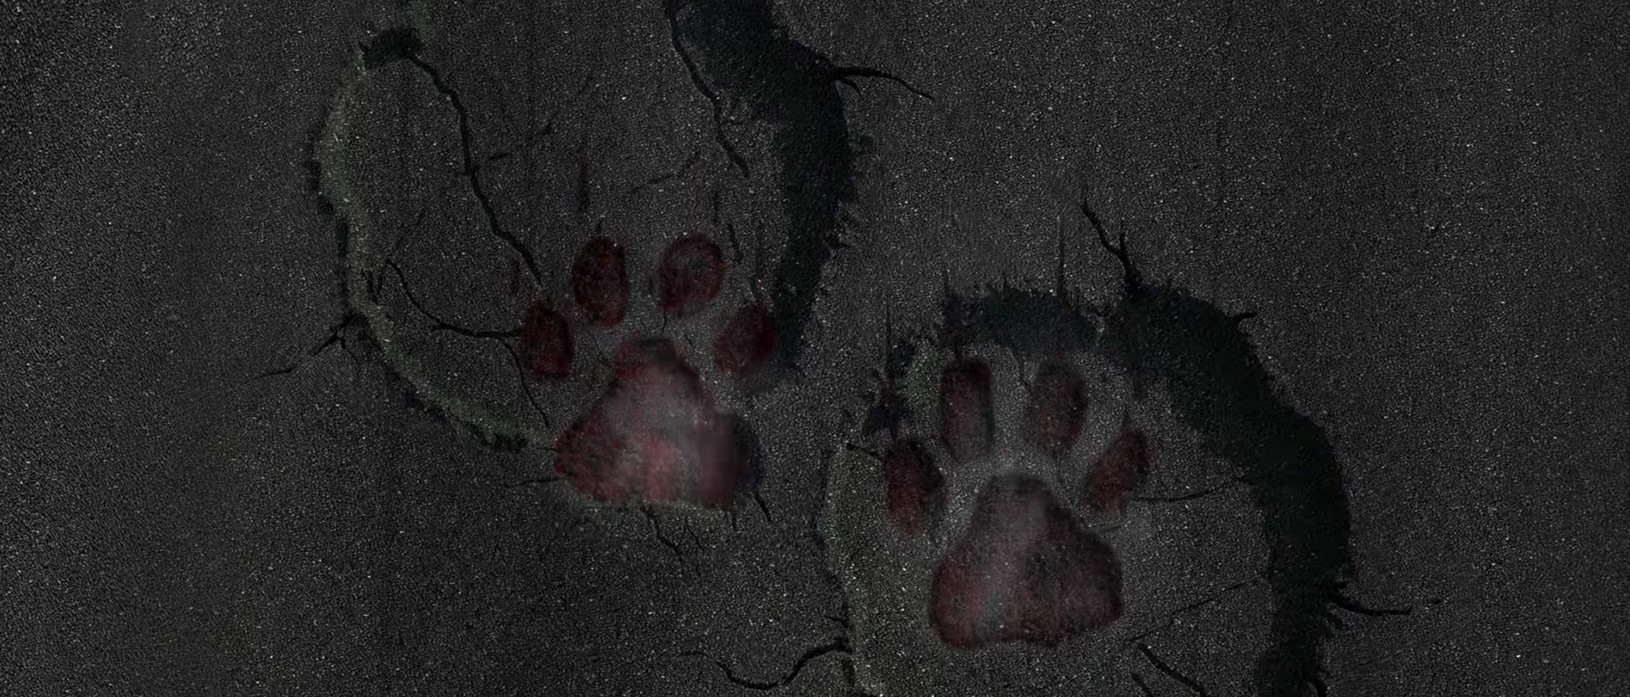 Elephant footprints over cat footprints